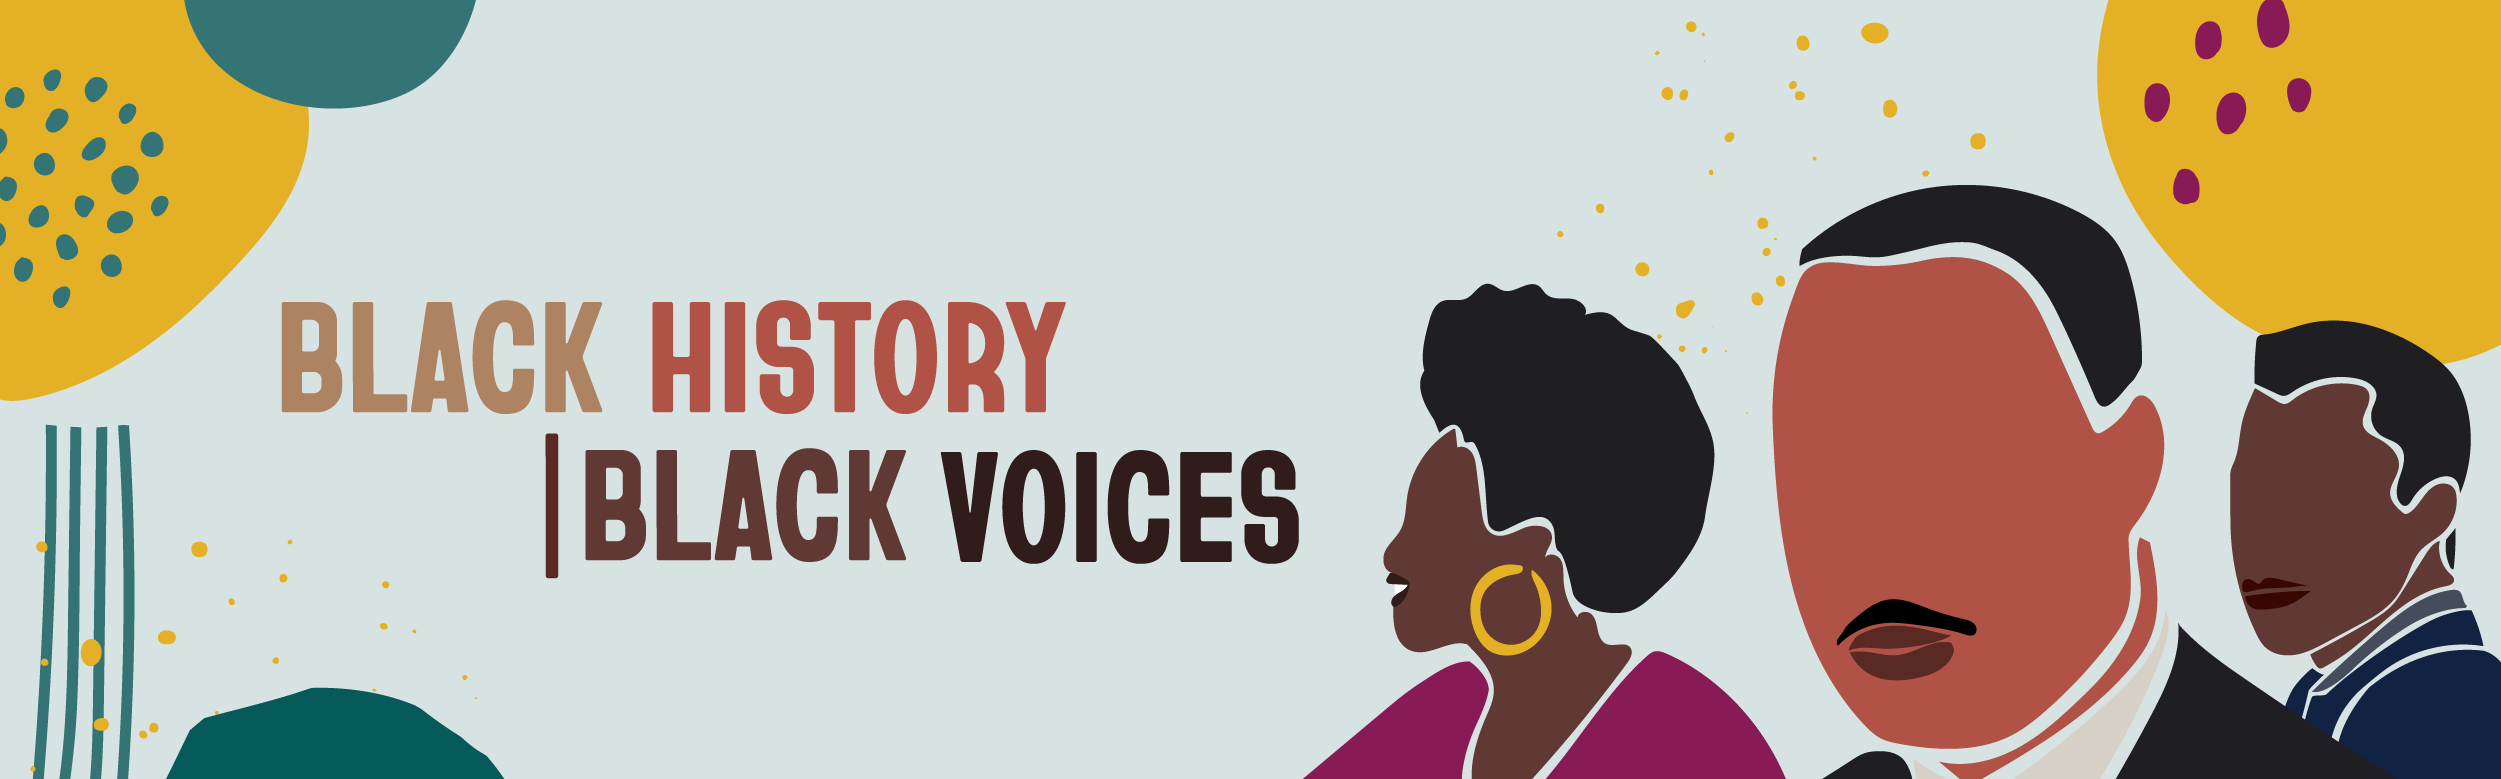 Black History Black Voices.